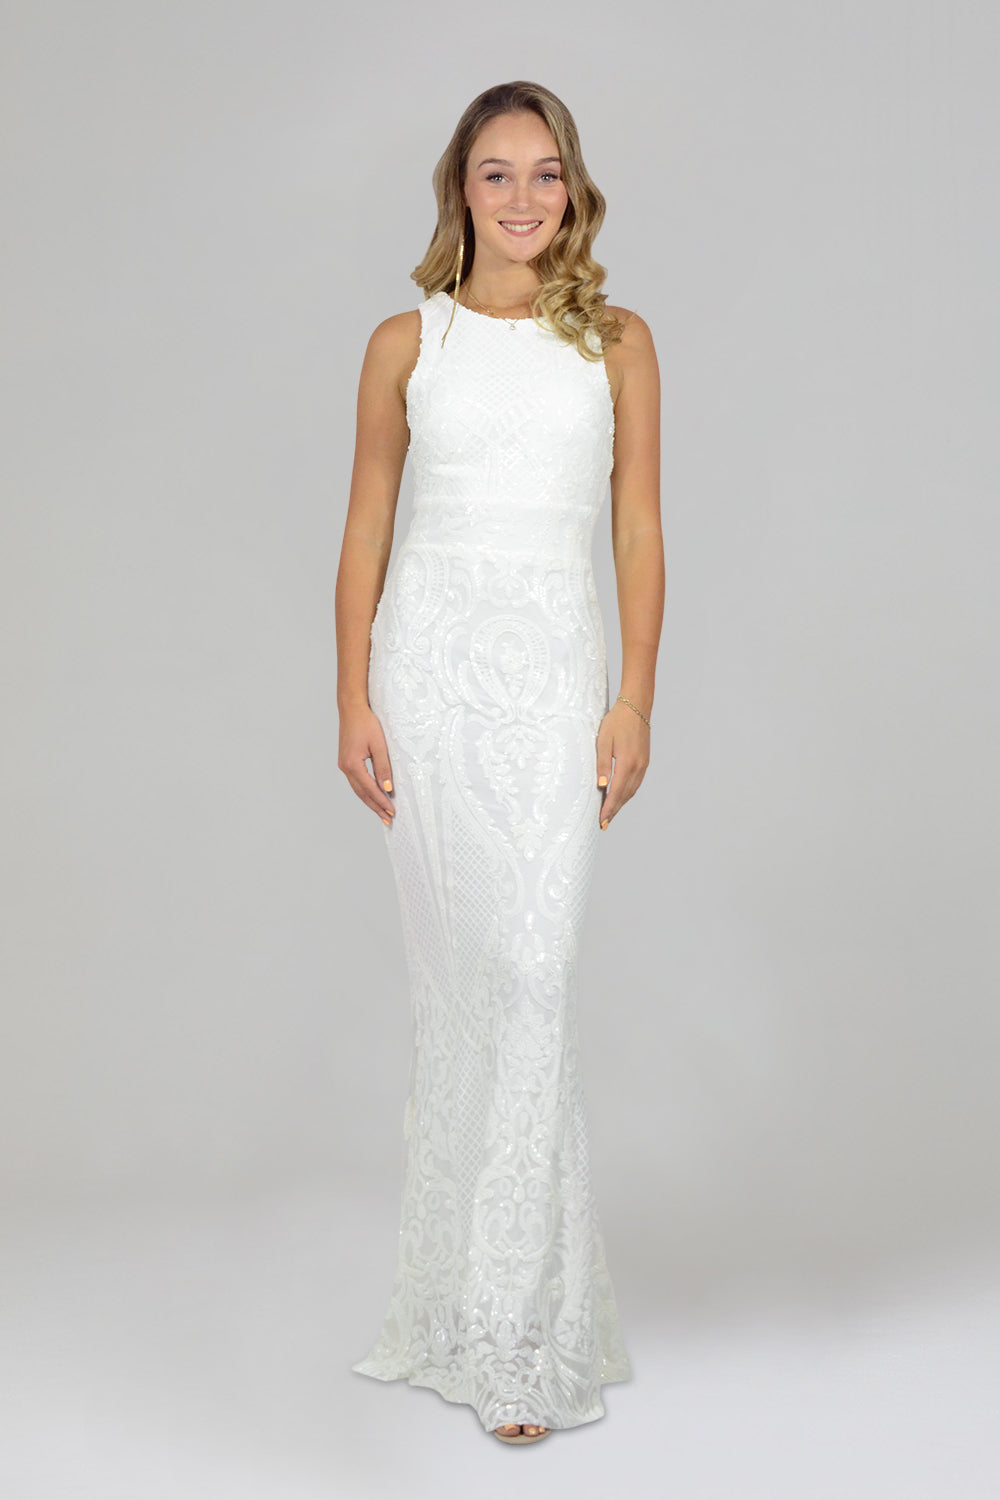 sequin white formal gowns perth australia online envious bridal & formal